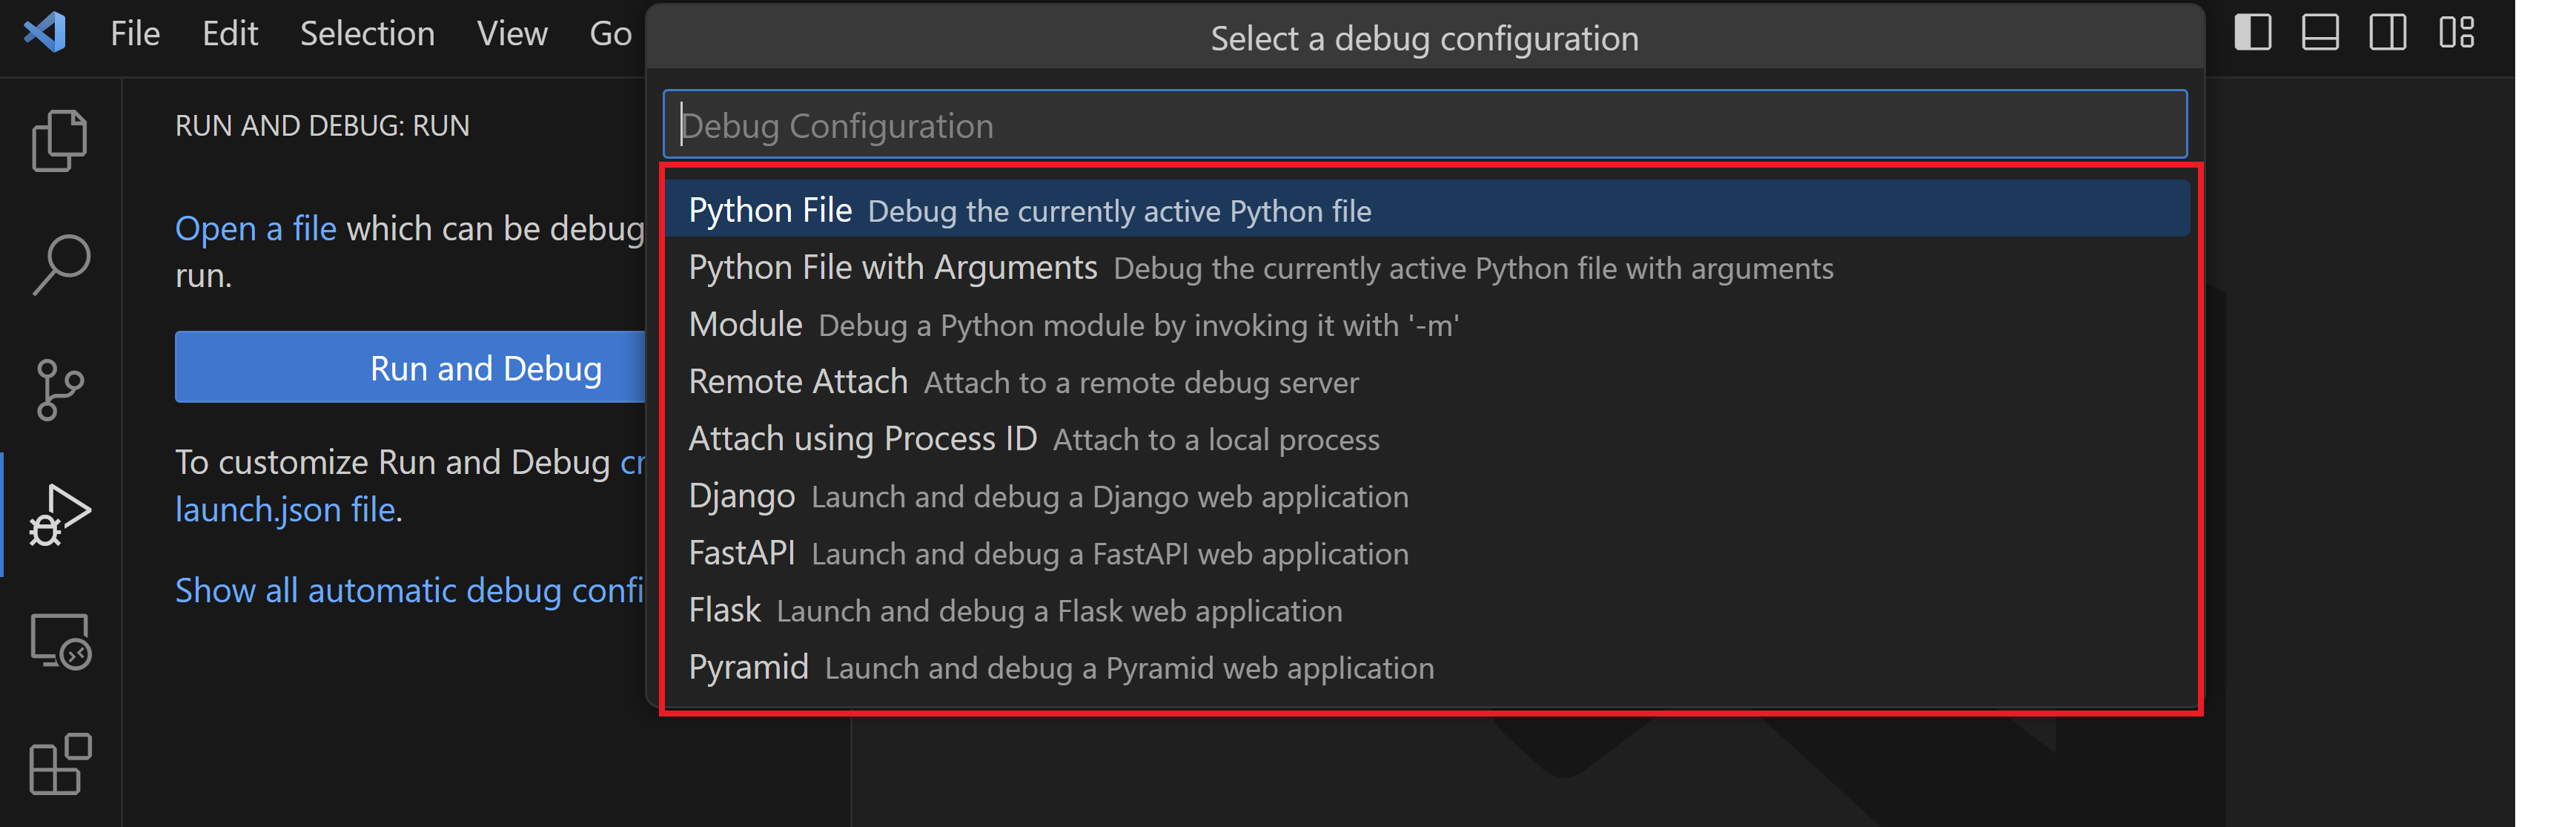 List of Python debugger configuration options